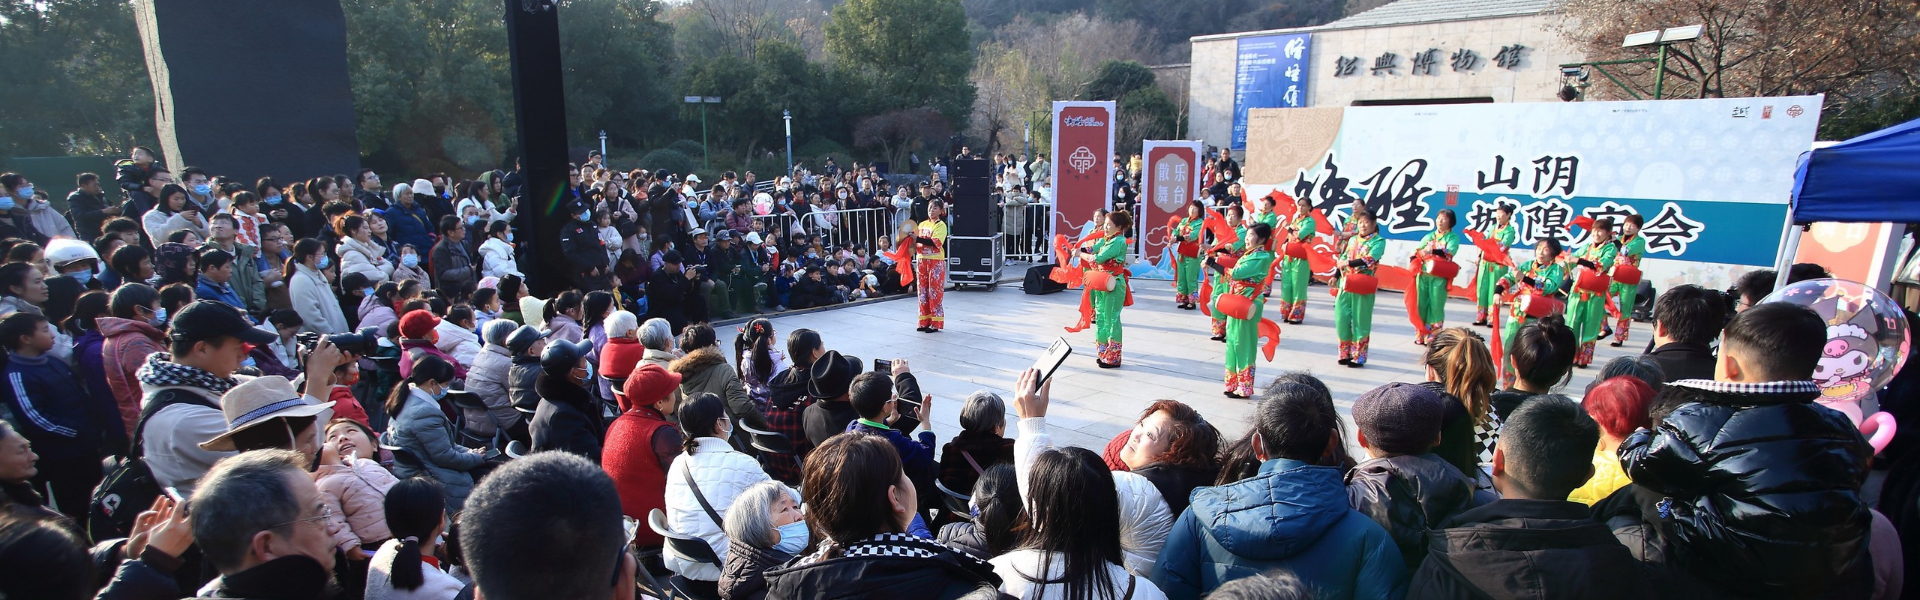 Shaoxing's CNY goods festival draws crowds